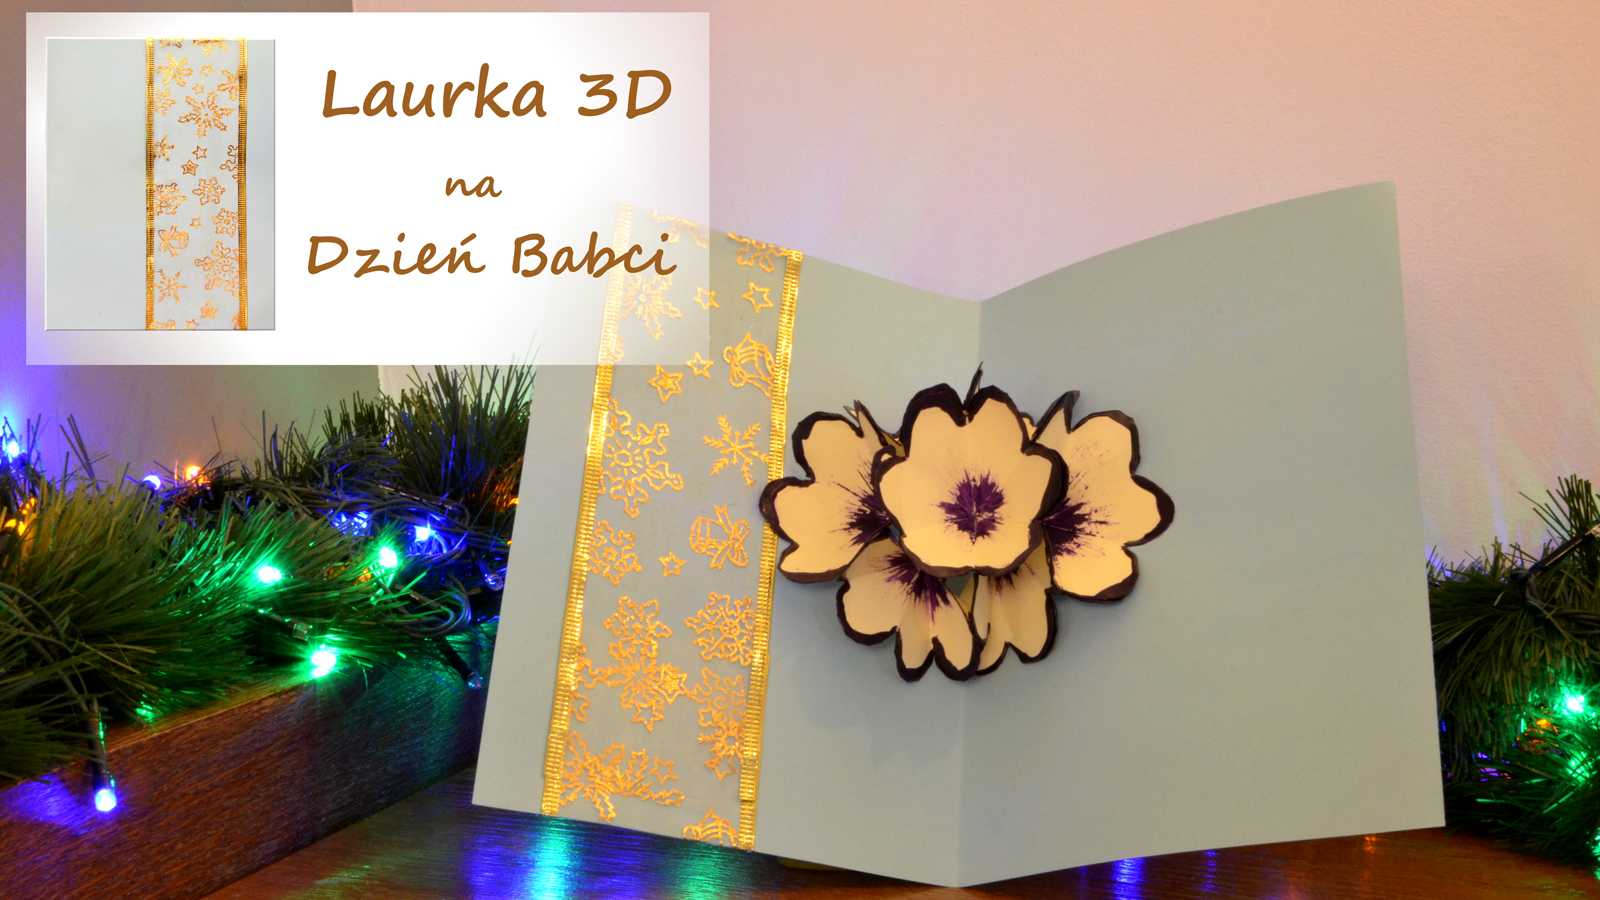 Laurka 3D, ilustracja